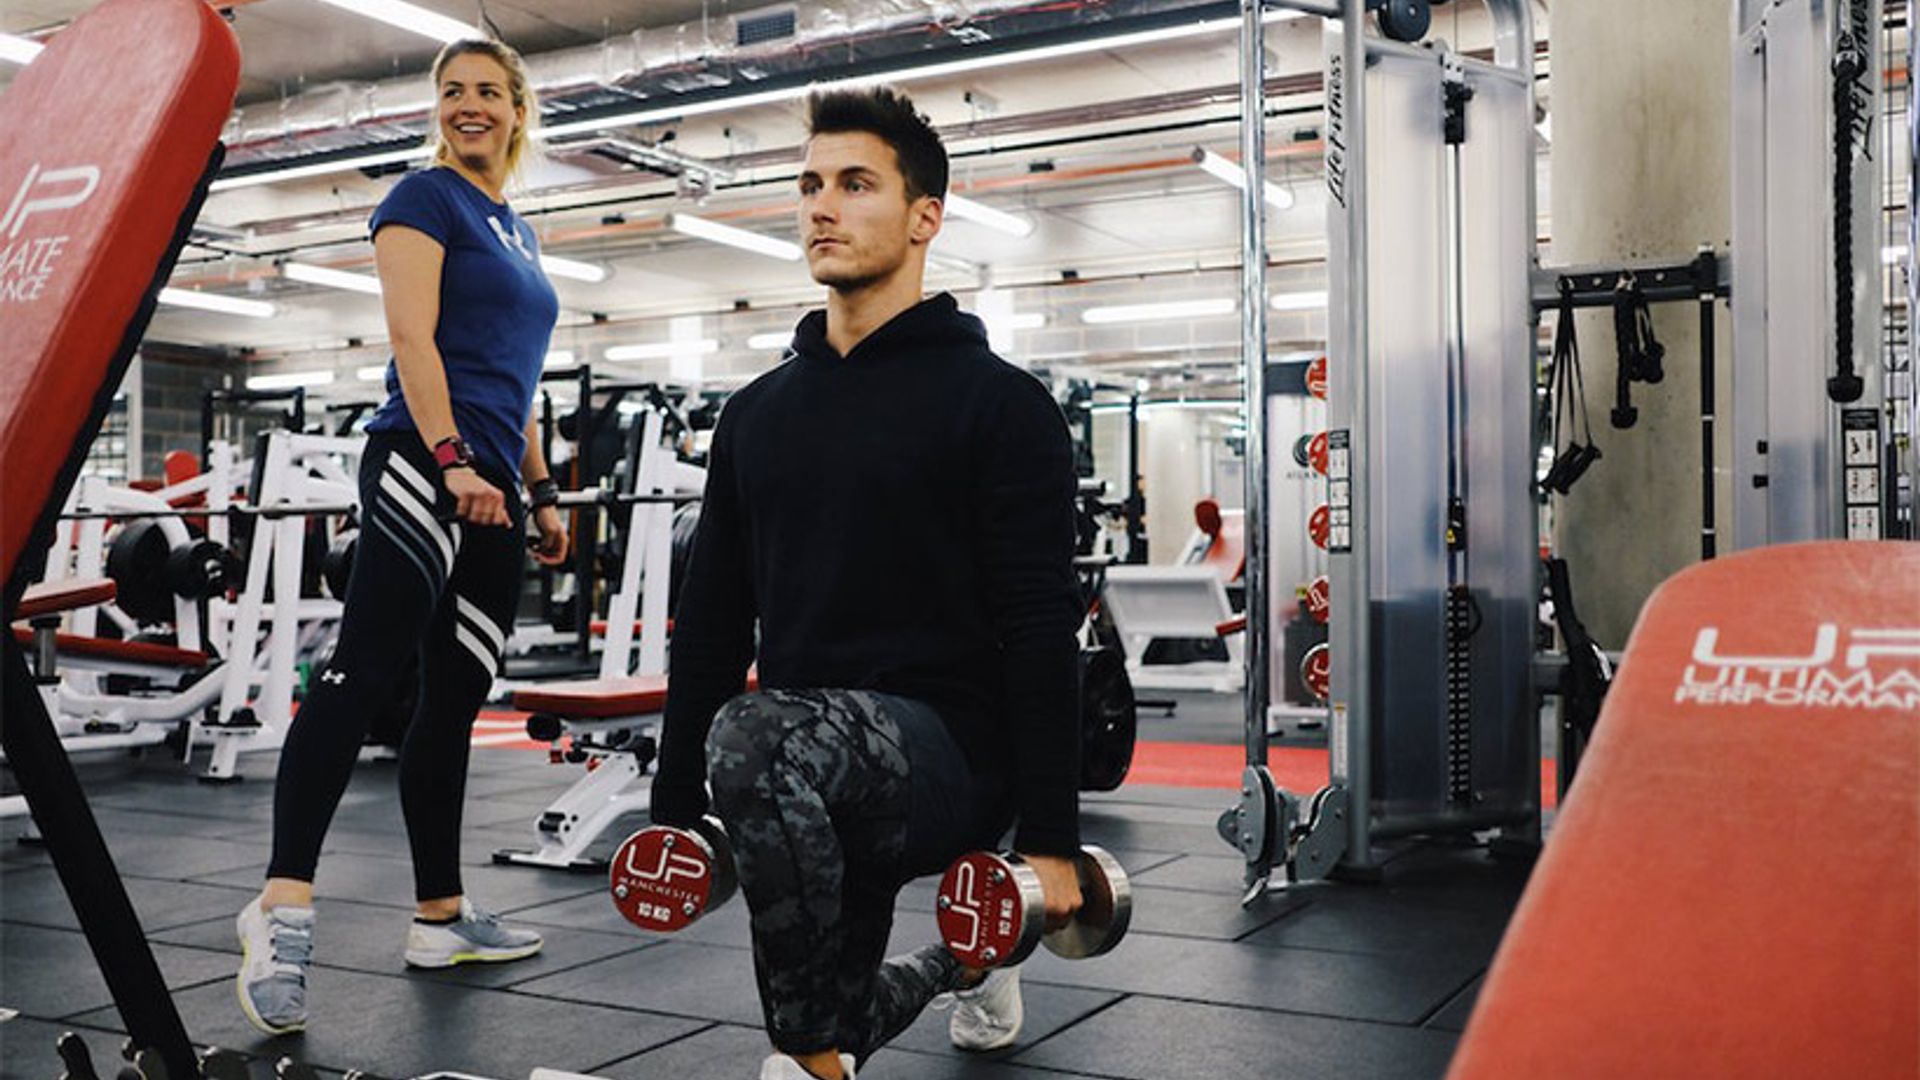 Gemma Atkinson does couple's workout with boyfriend Gorka Marquez